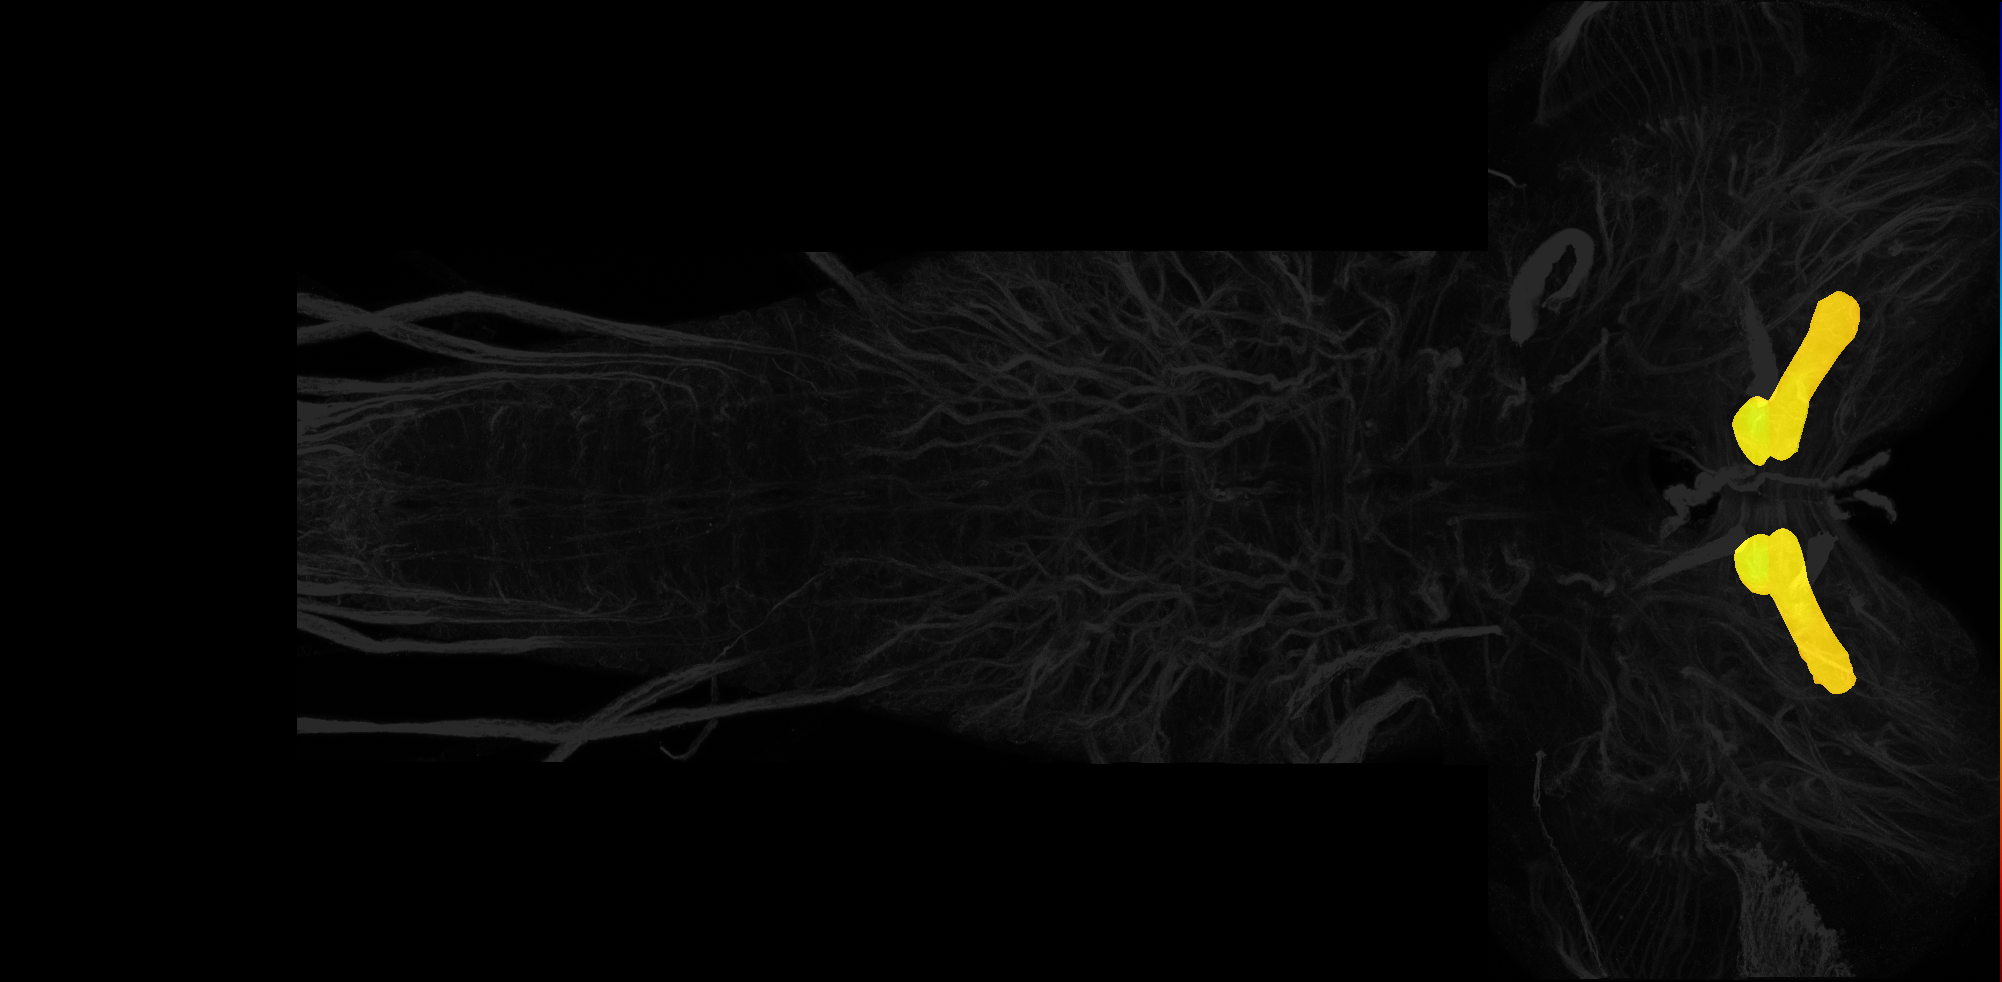 medial lobe of mushroom body on L3 CNS template, Wood2018